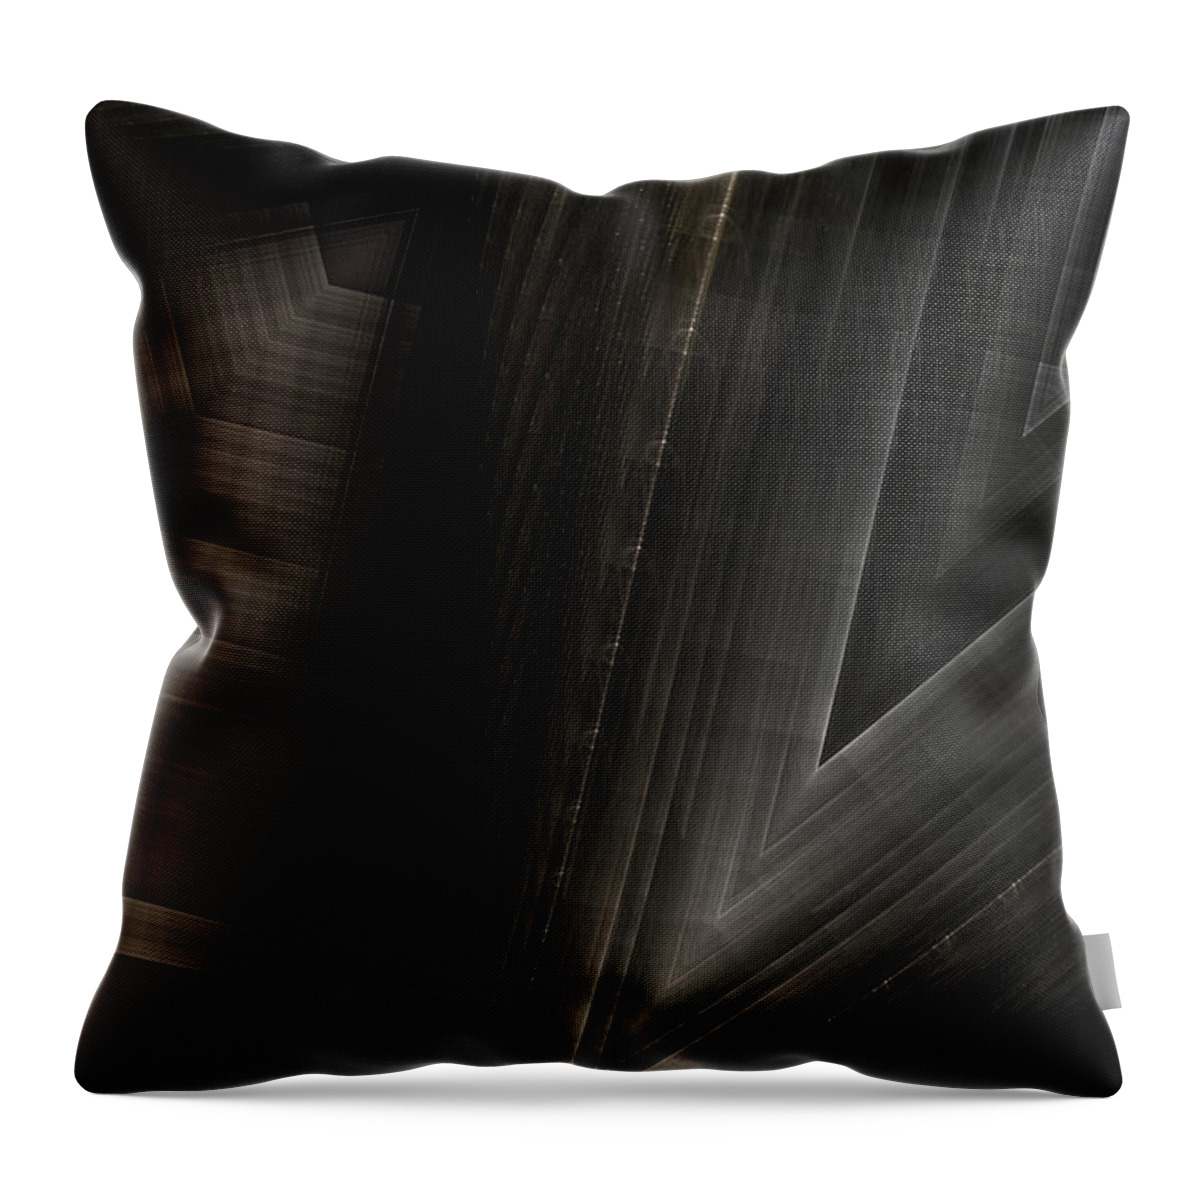 Pattern Throw Pillow featuring the digital art Sitorian Metal Z by Rolando Burbon